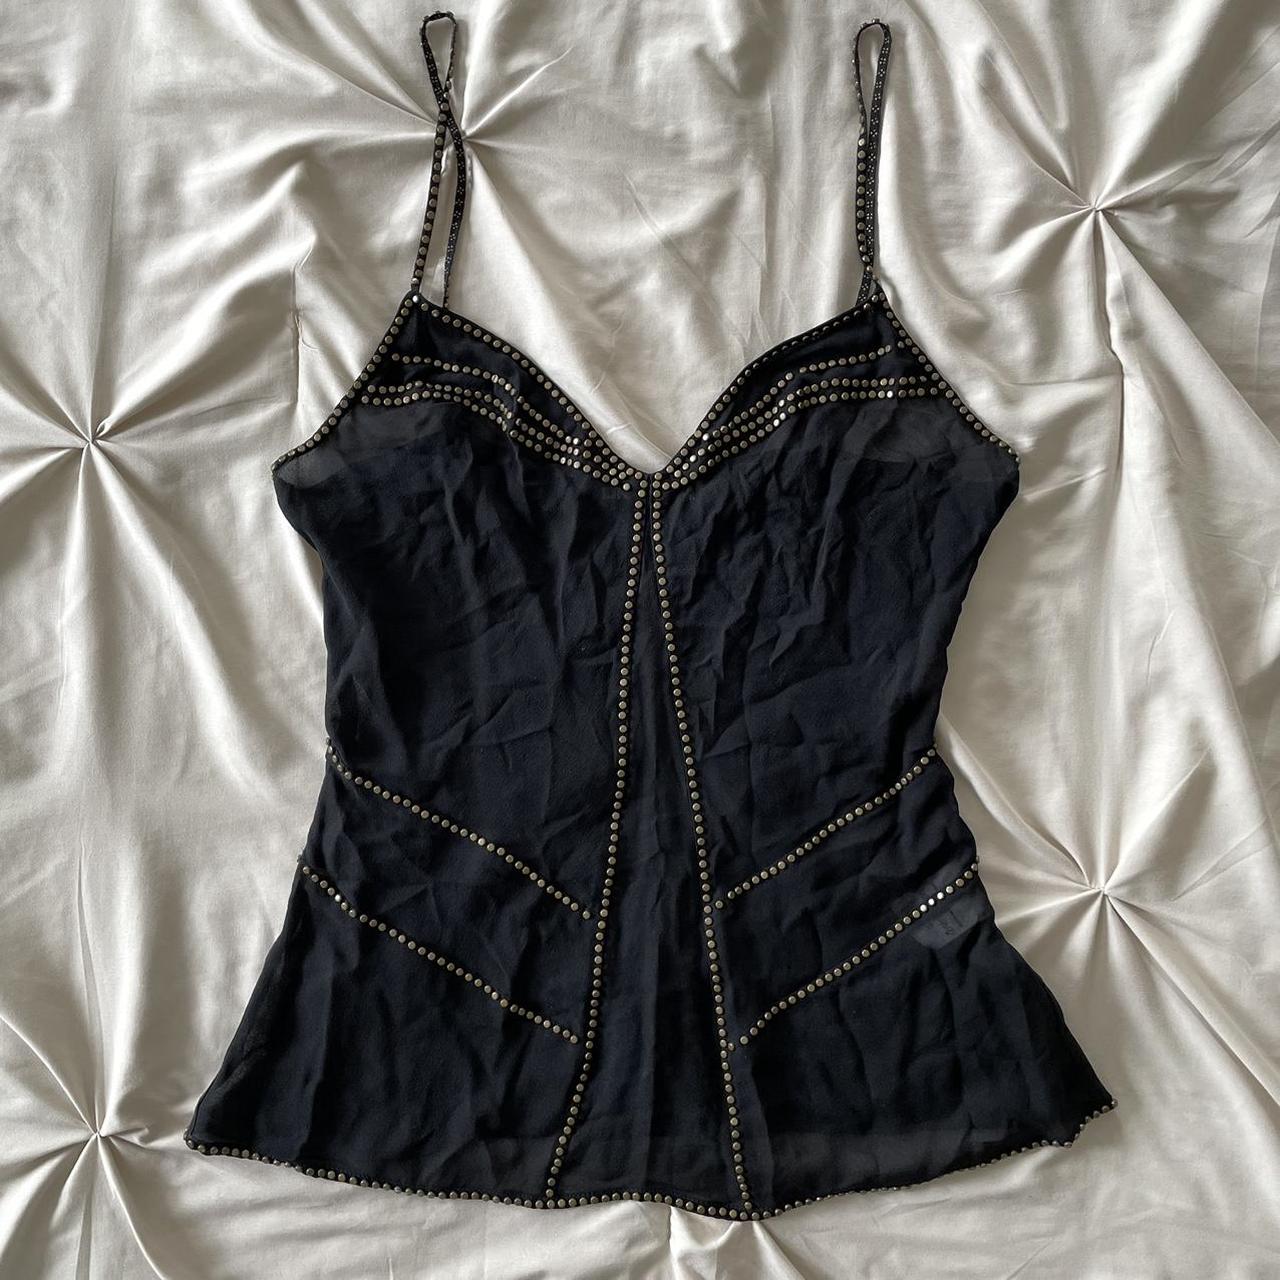 DKNY Women's Black and Gold Vest